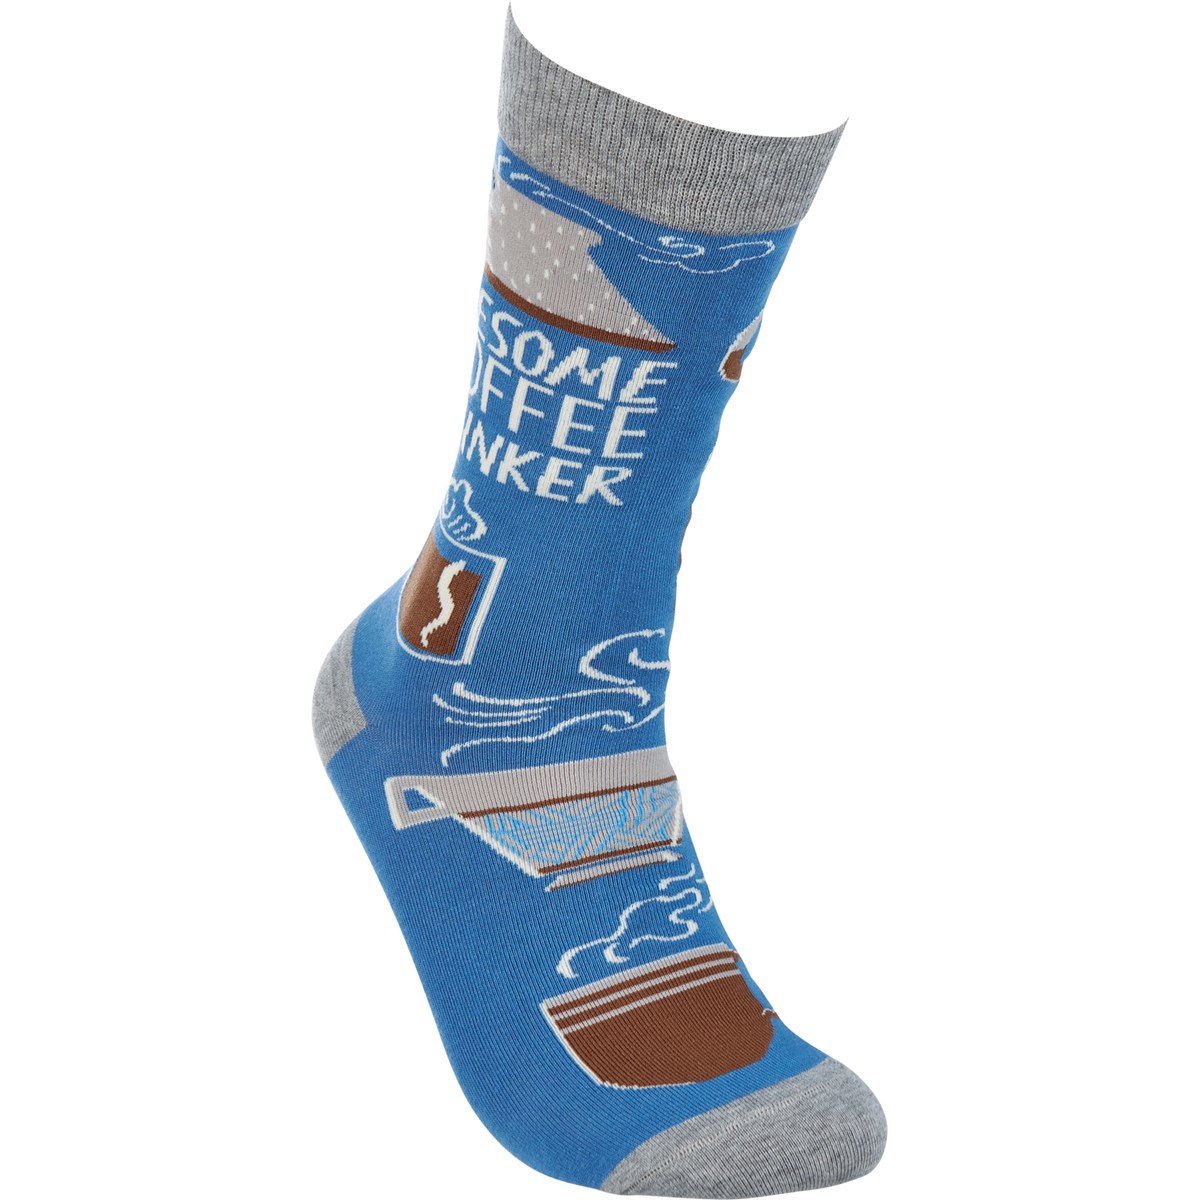 Awesome Coffee Drinker Socks - Cotton, Nylon, Spandex